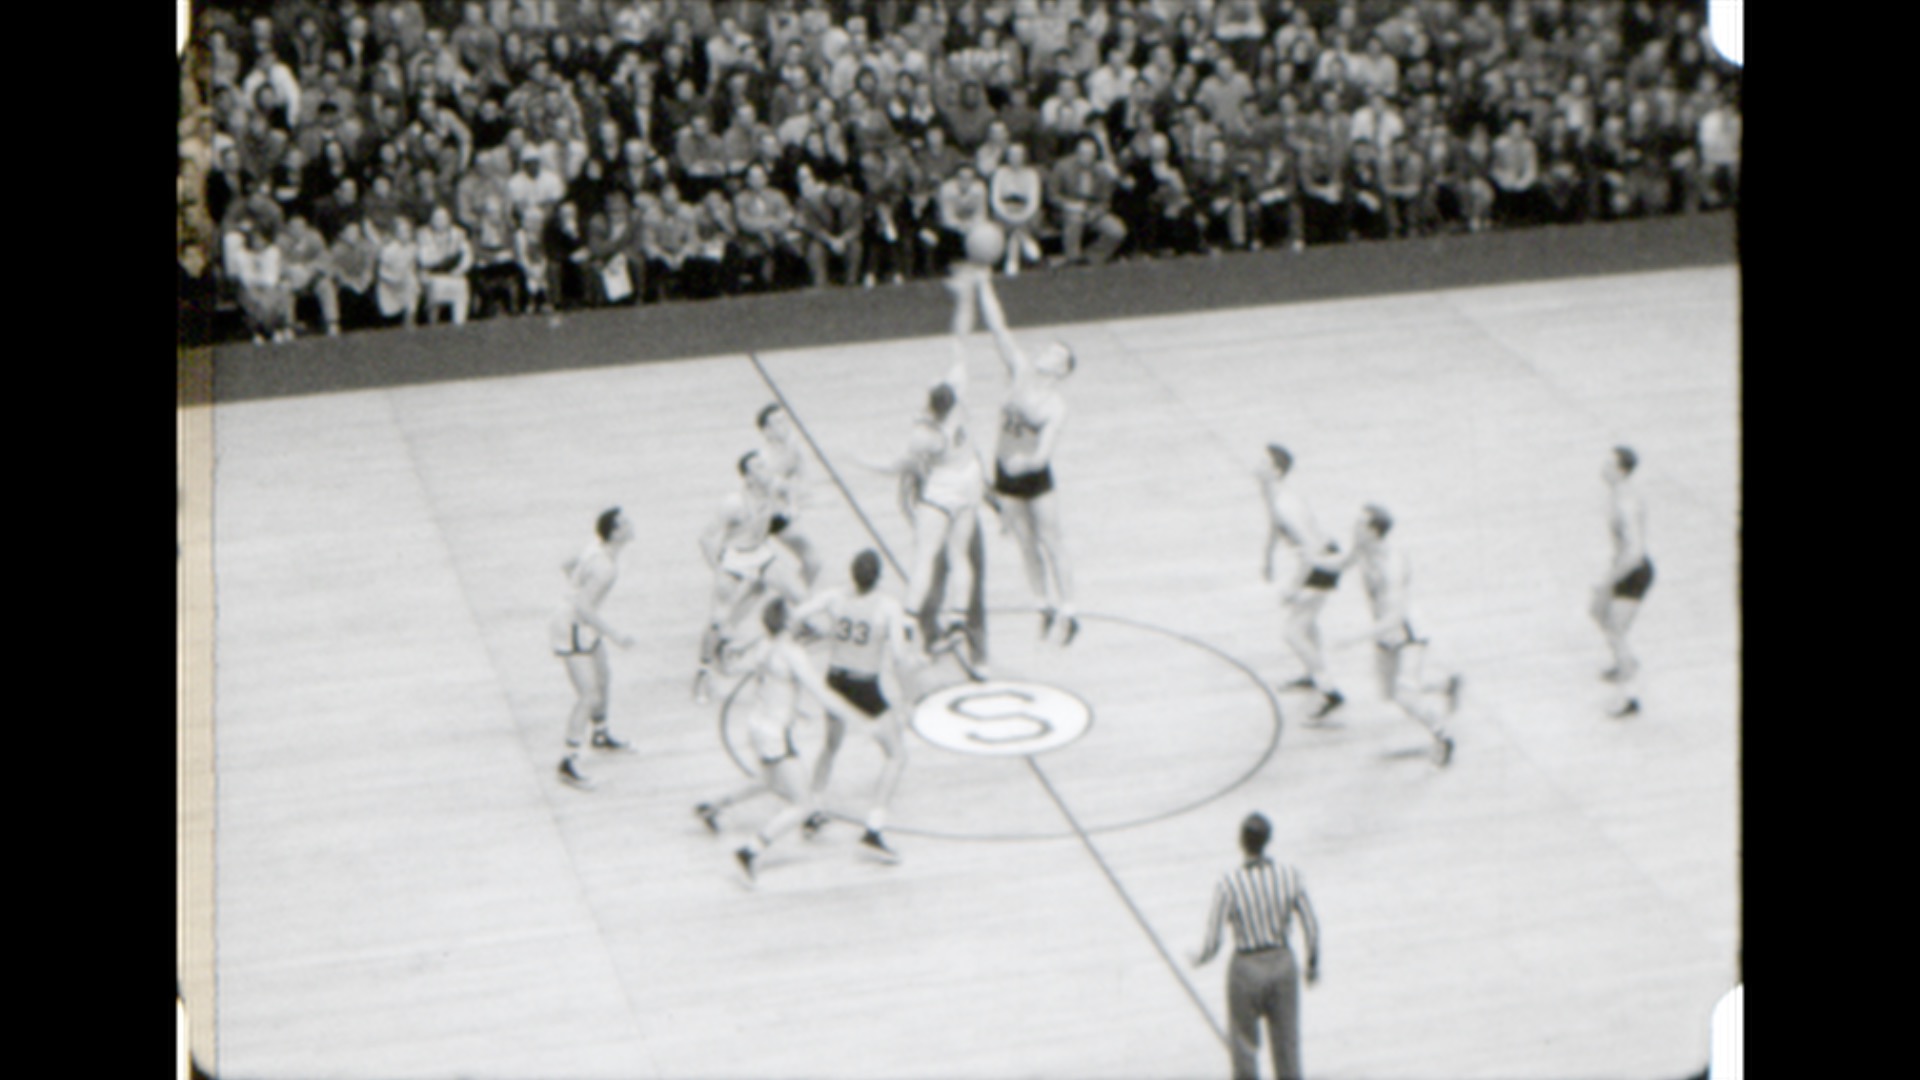 MSC Basketball vs. Illinois, 1951